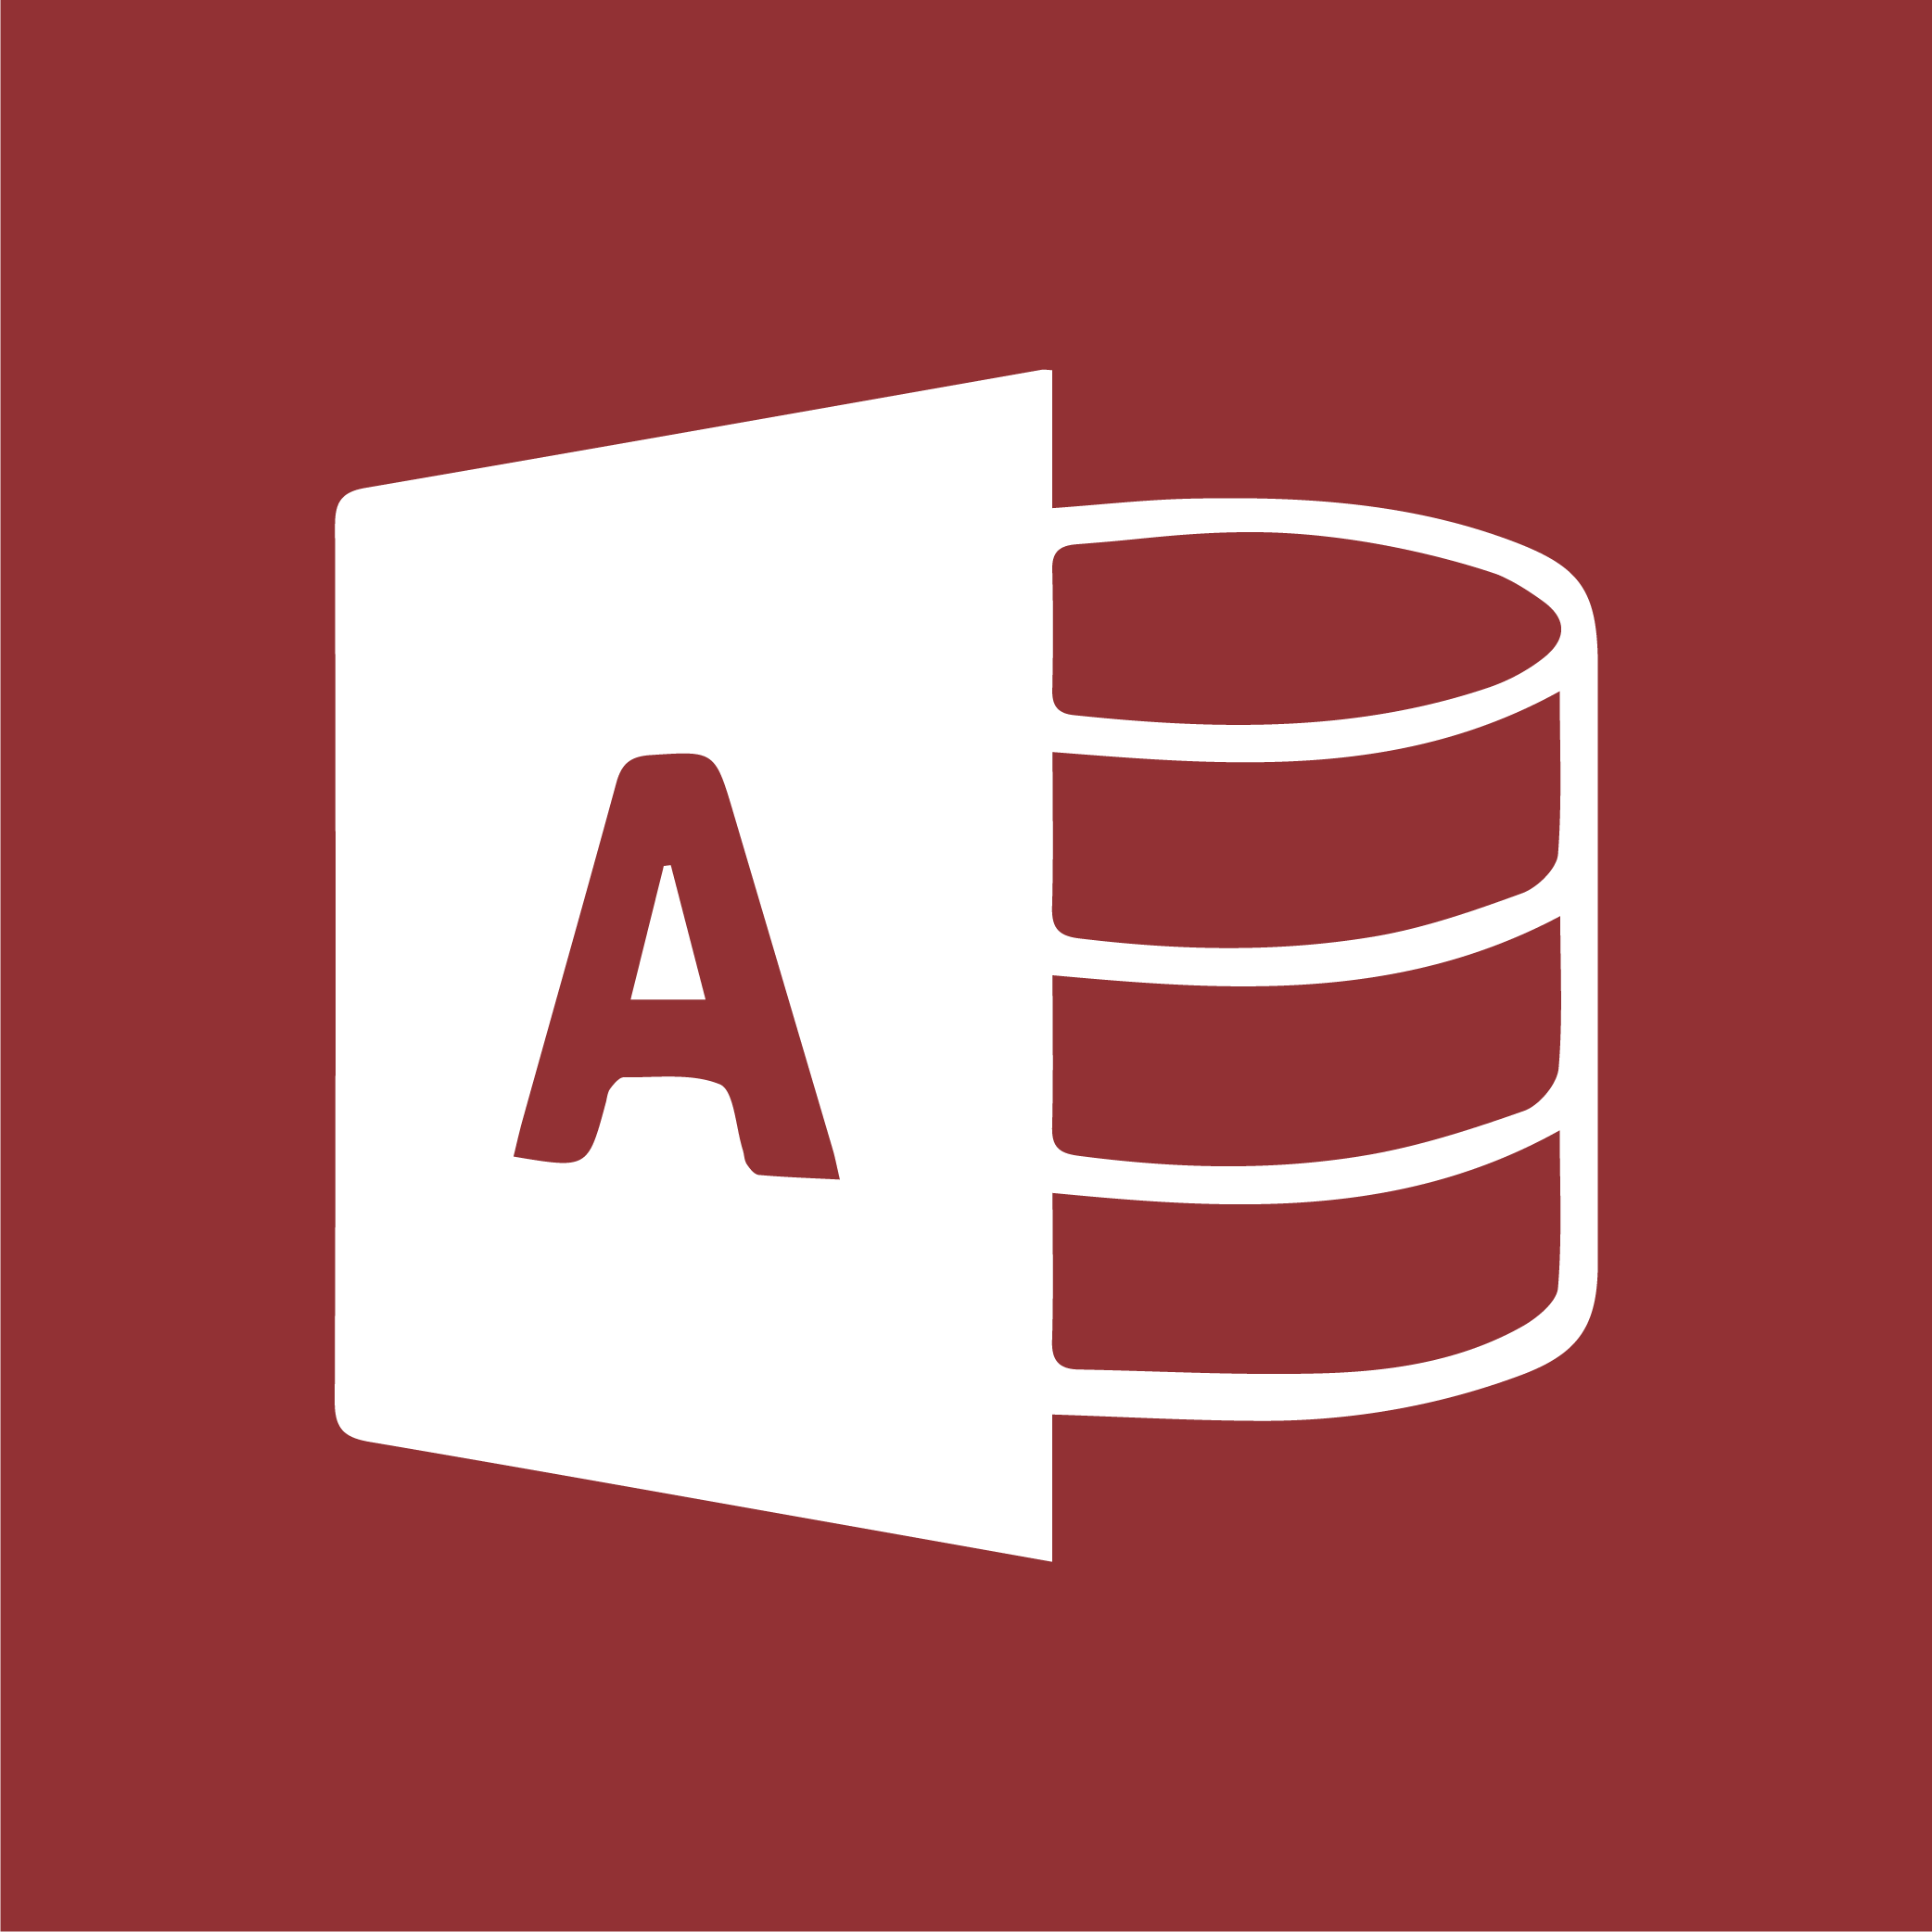 Иконка MS access. MS access ярлык. Базы данных access логотип. Microsoft access картинки. Access life